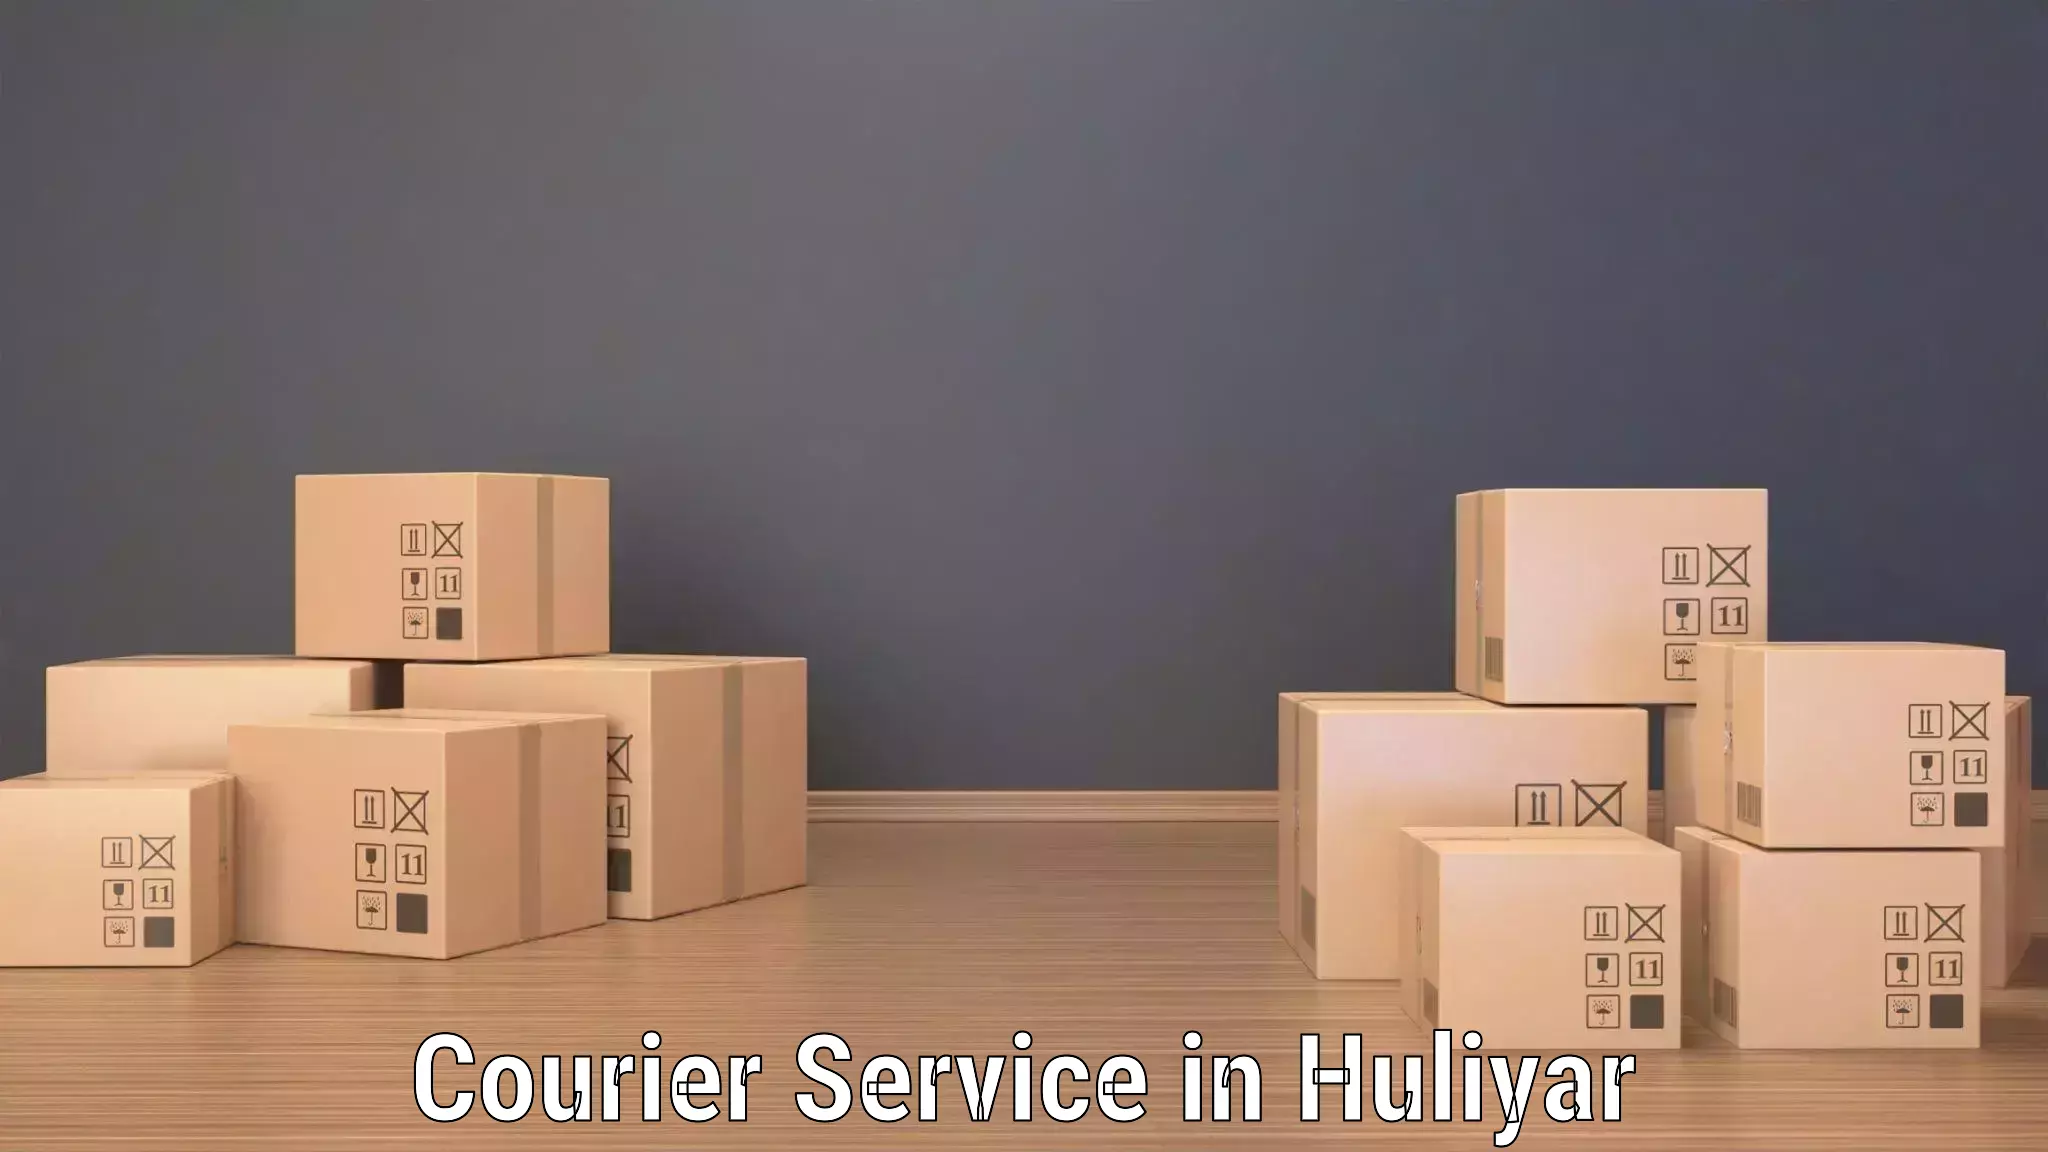 Quick dispatch service in Huliyar